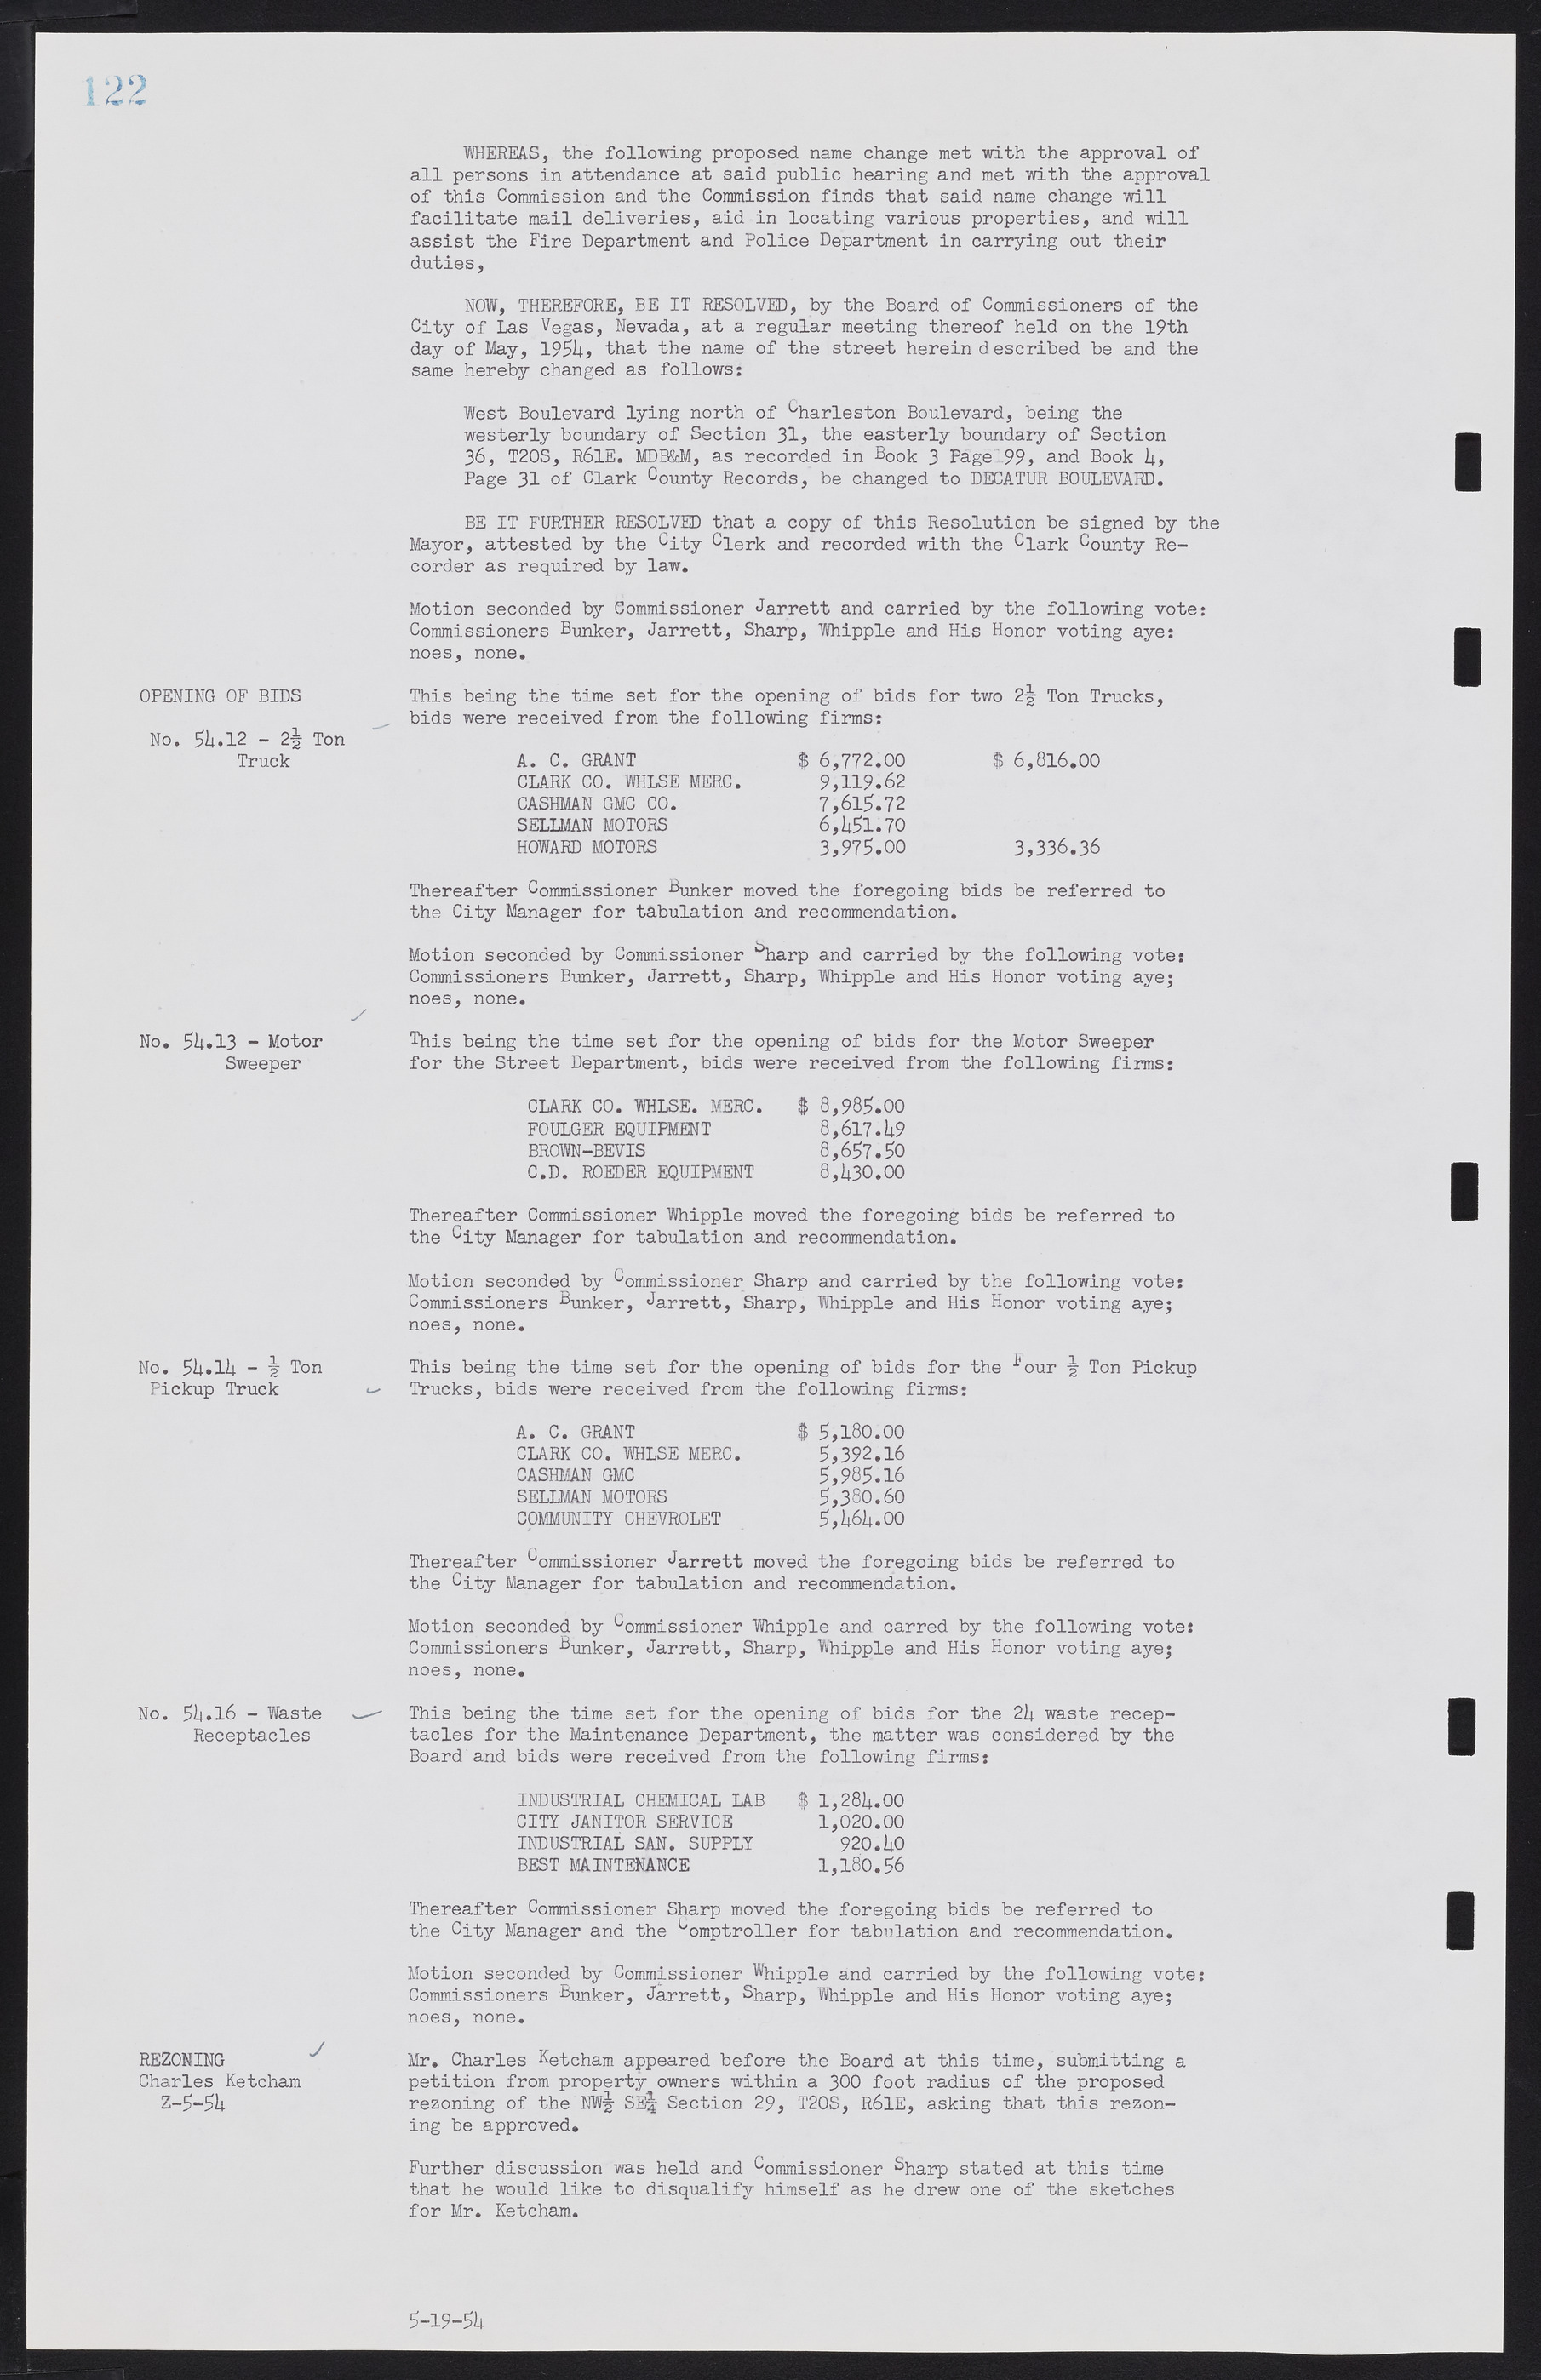 Las Vegas City Commission Minutes, February 17, 1954 to September 21, 1955, lvc000009-126